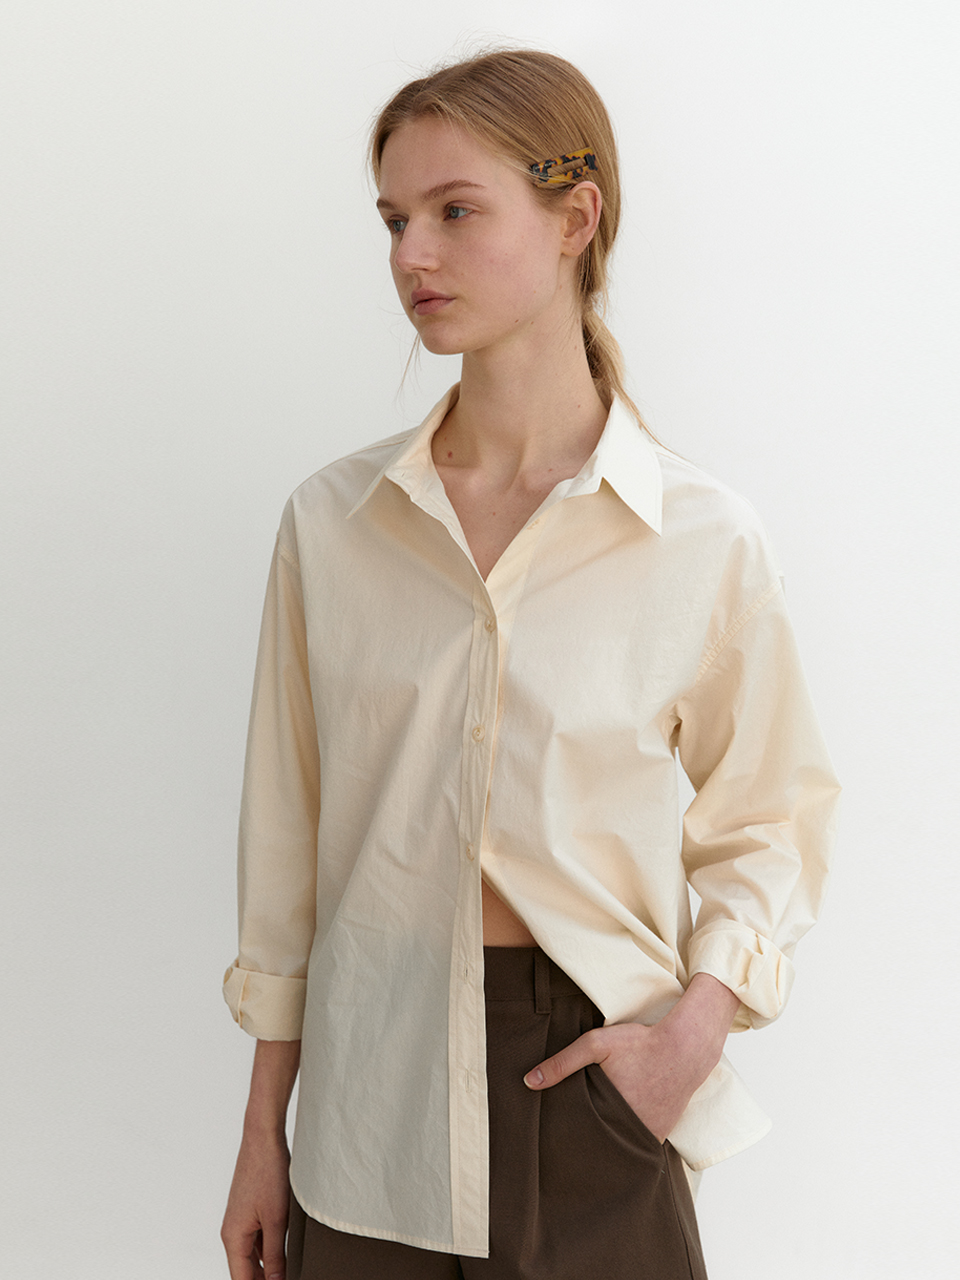 standard overfit shirts - light beigeBRENDA BRENDEN